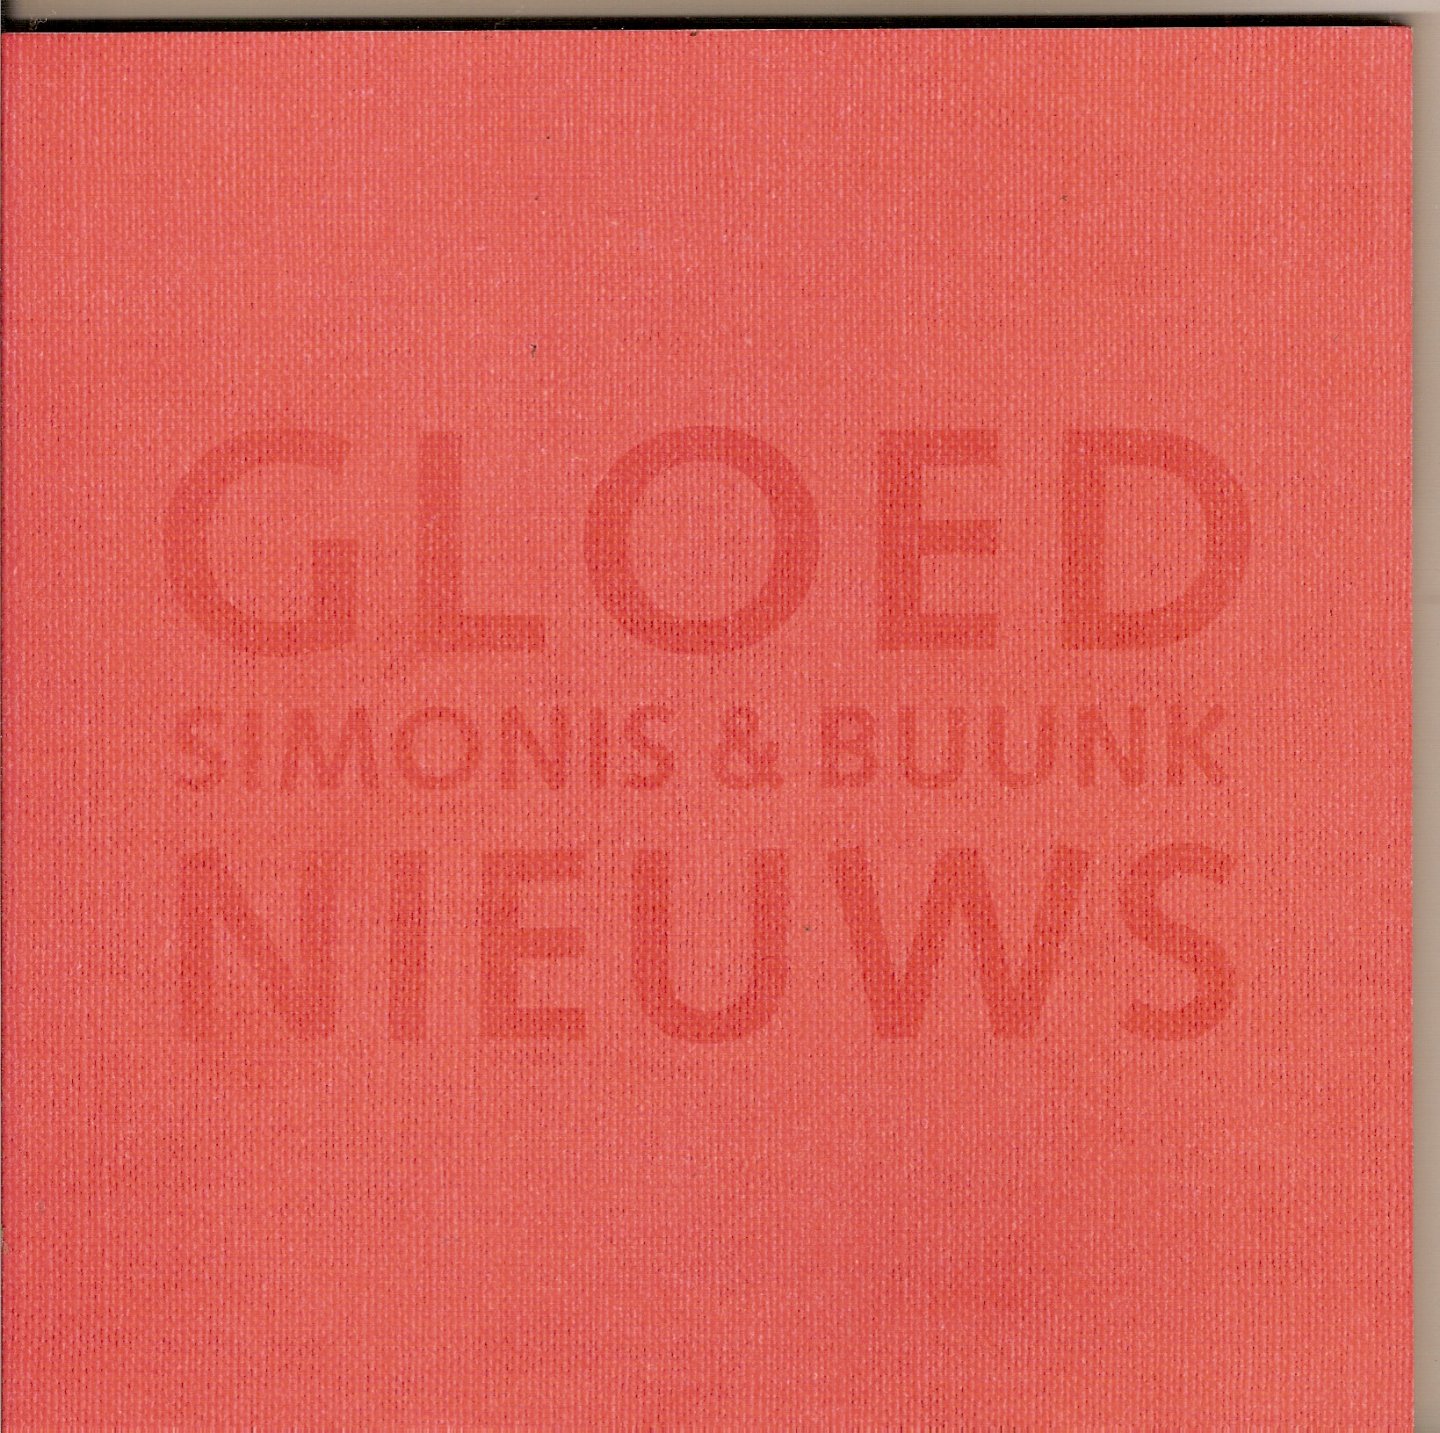 Simonis, Mariëtte & Snellen, Emilie (samenstelling en eindredactie) - Gloednieuws / Simonis & Buunk